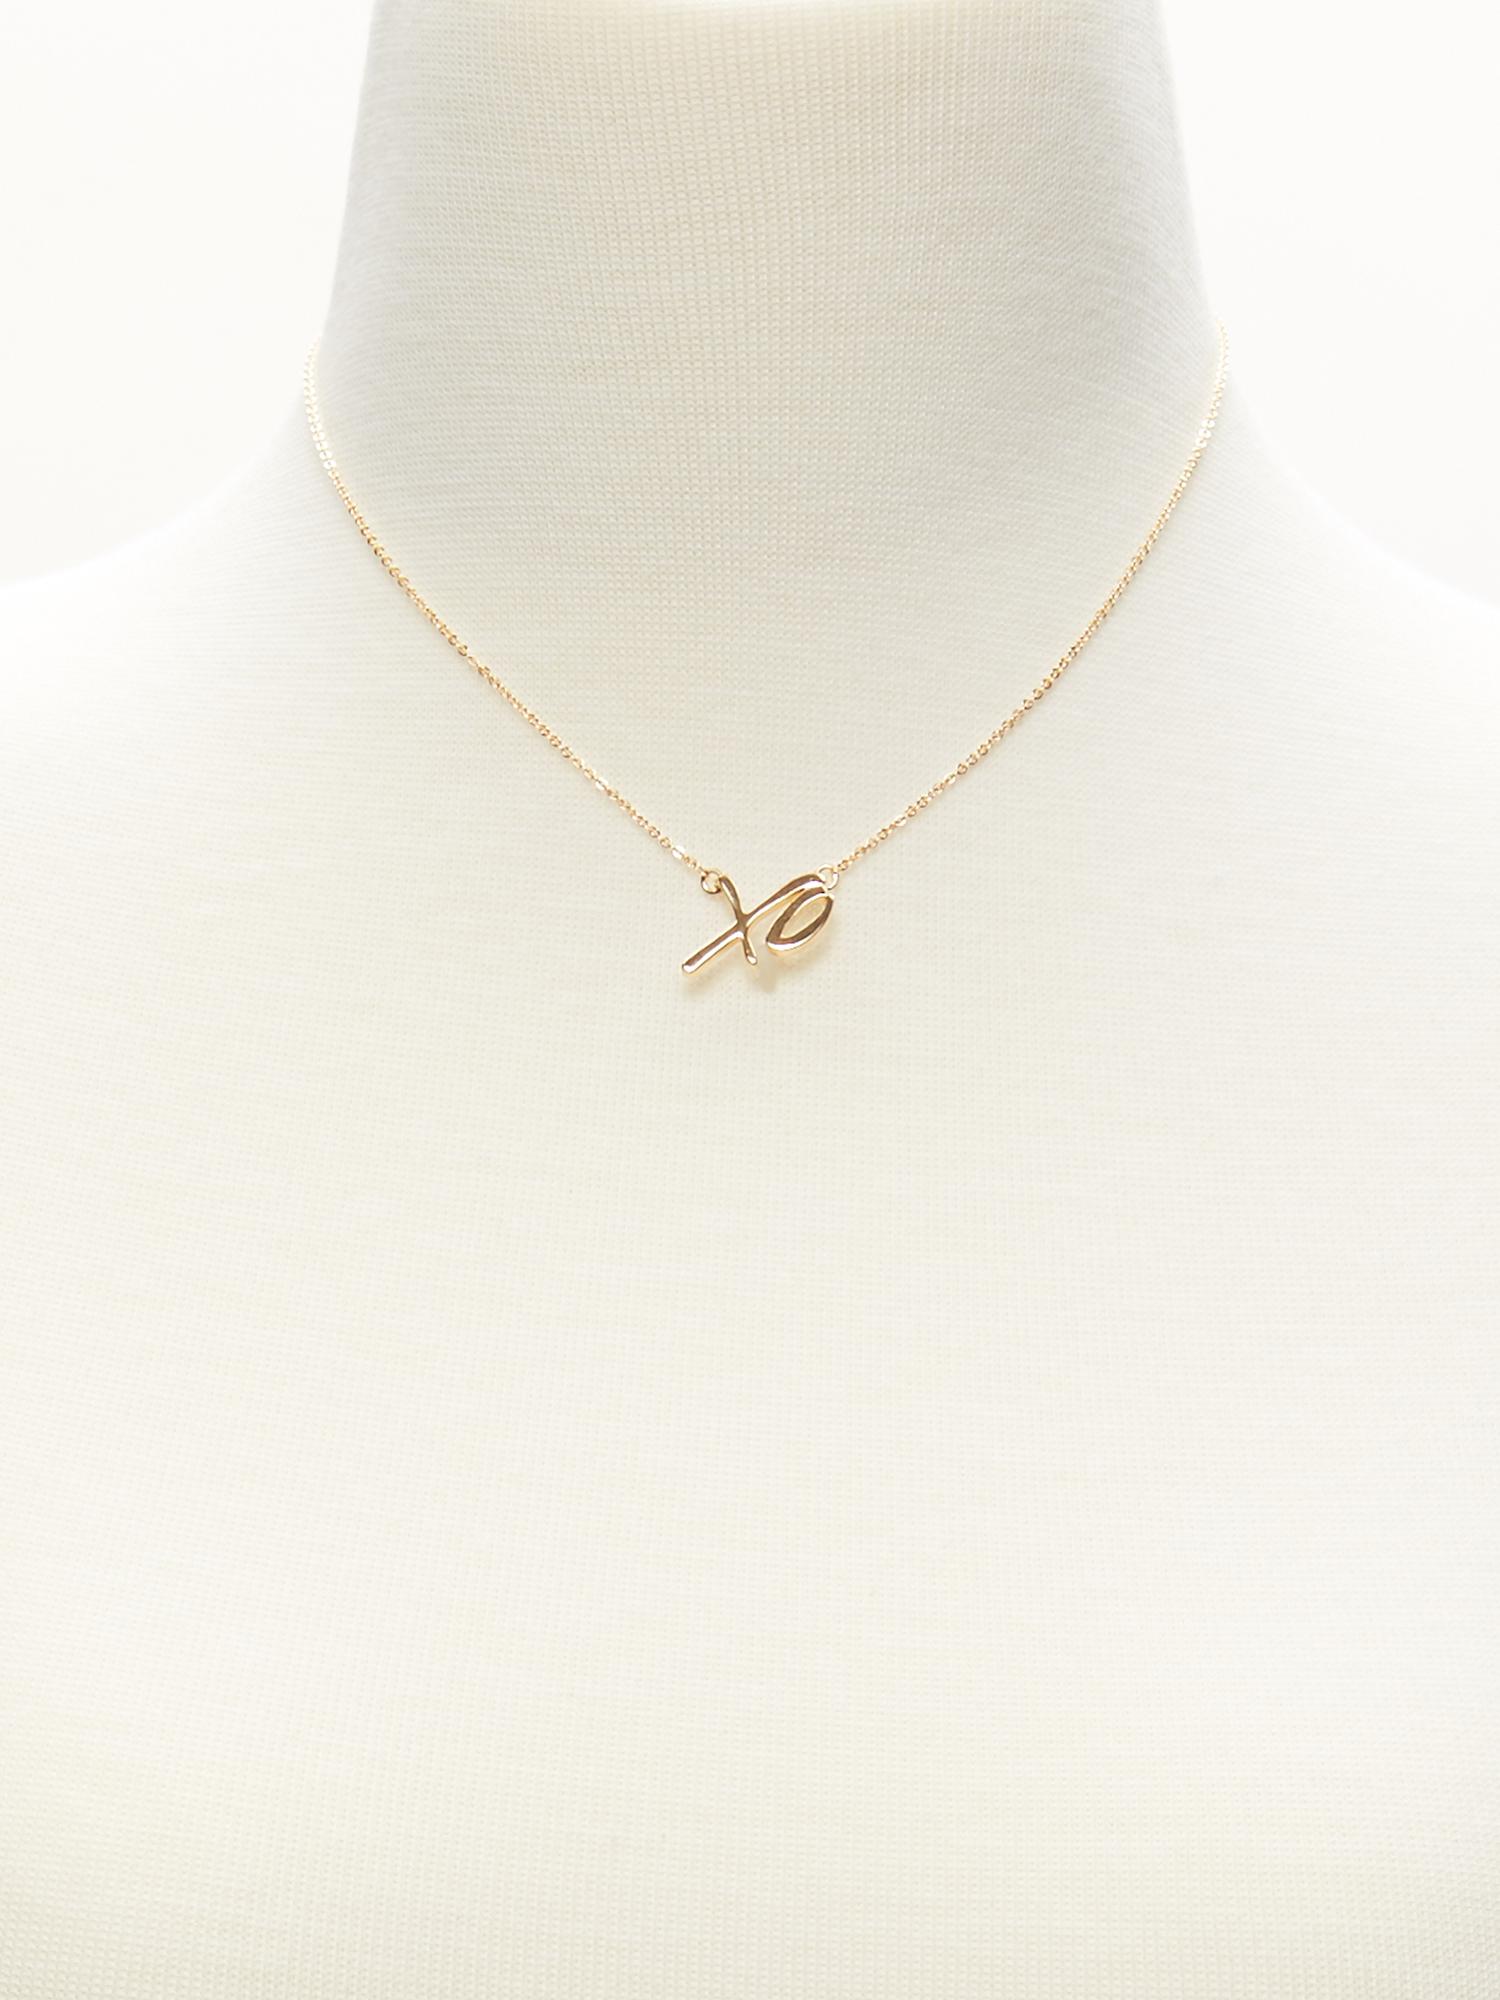 Delicate "XO" Necklace